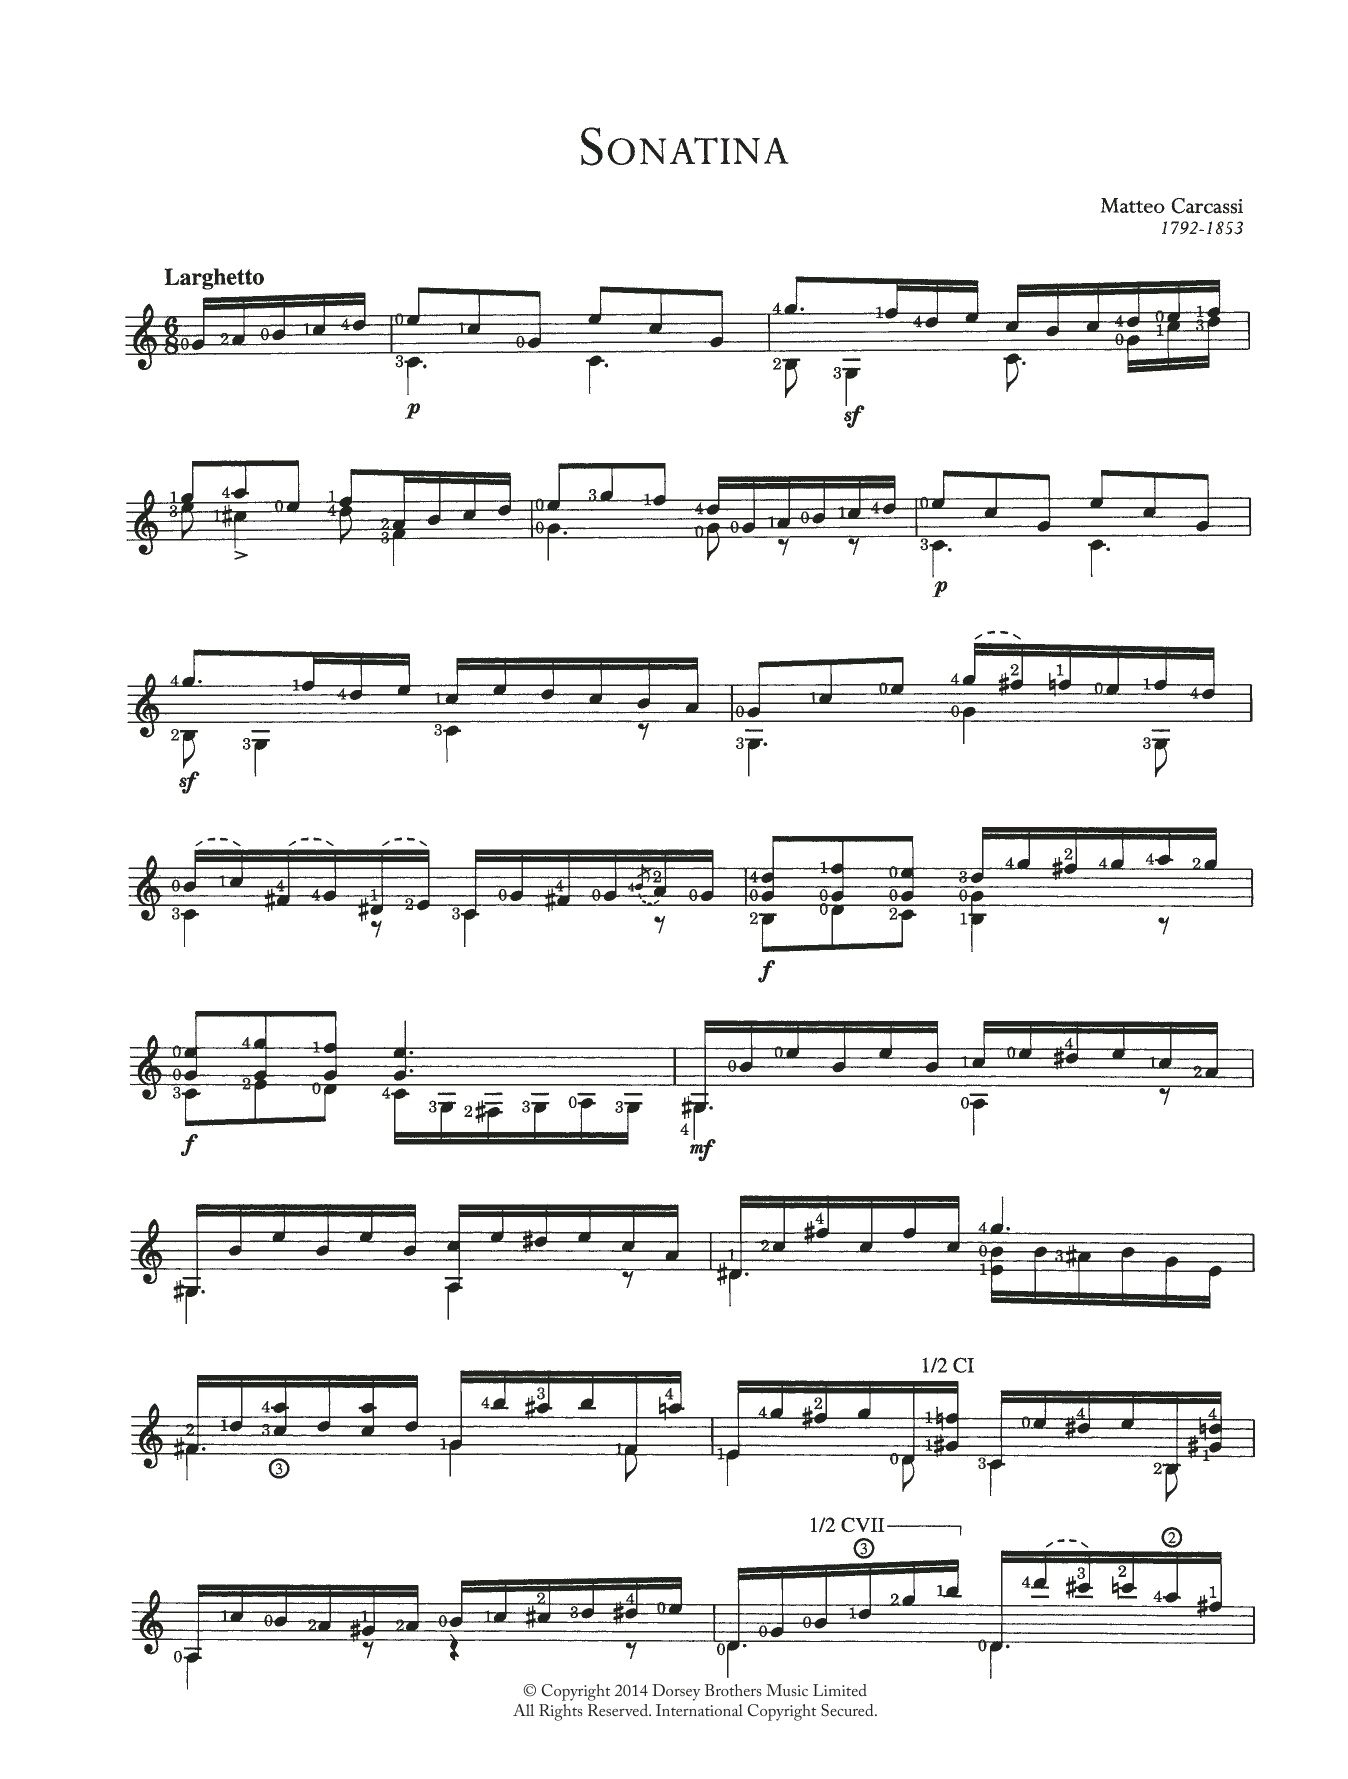 Ferdinando Carulli Sonatina Sheet Music Notes & Chords for Guitar - Download or Print PDF